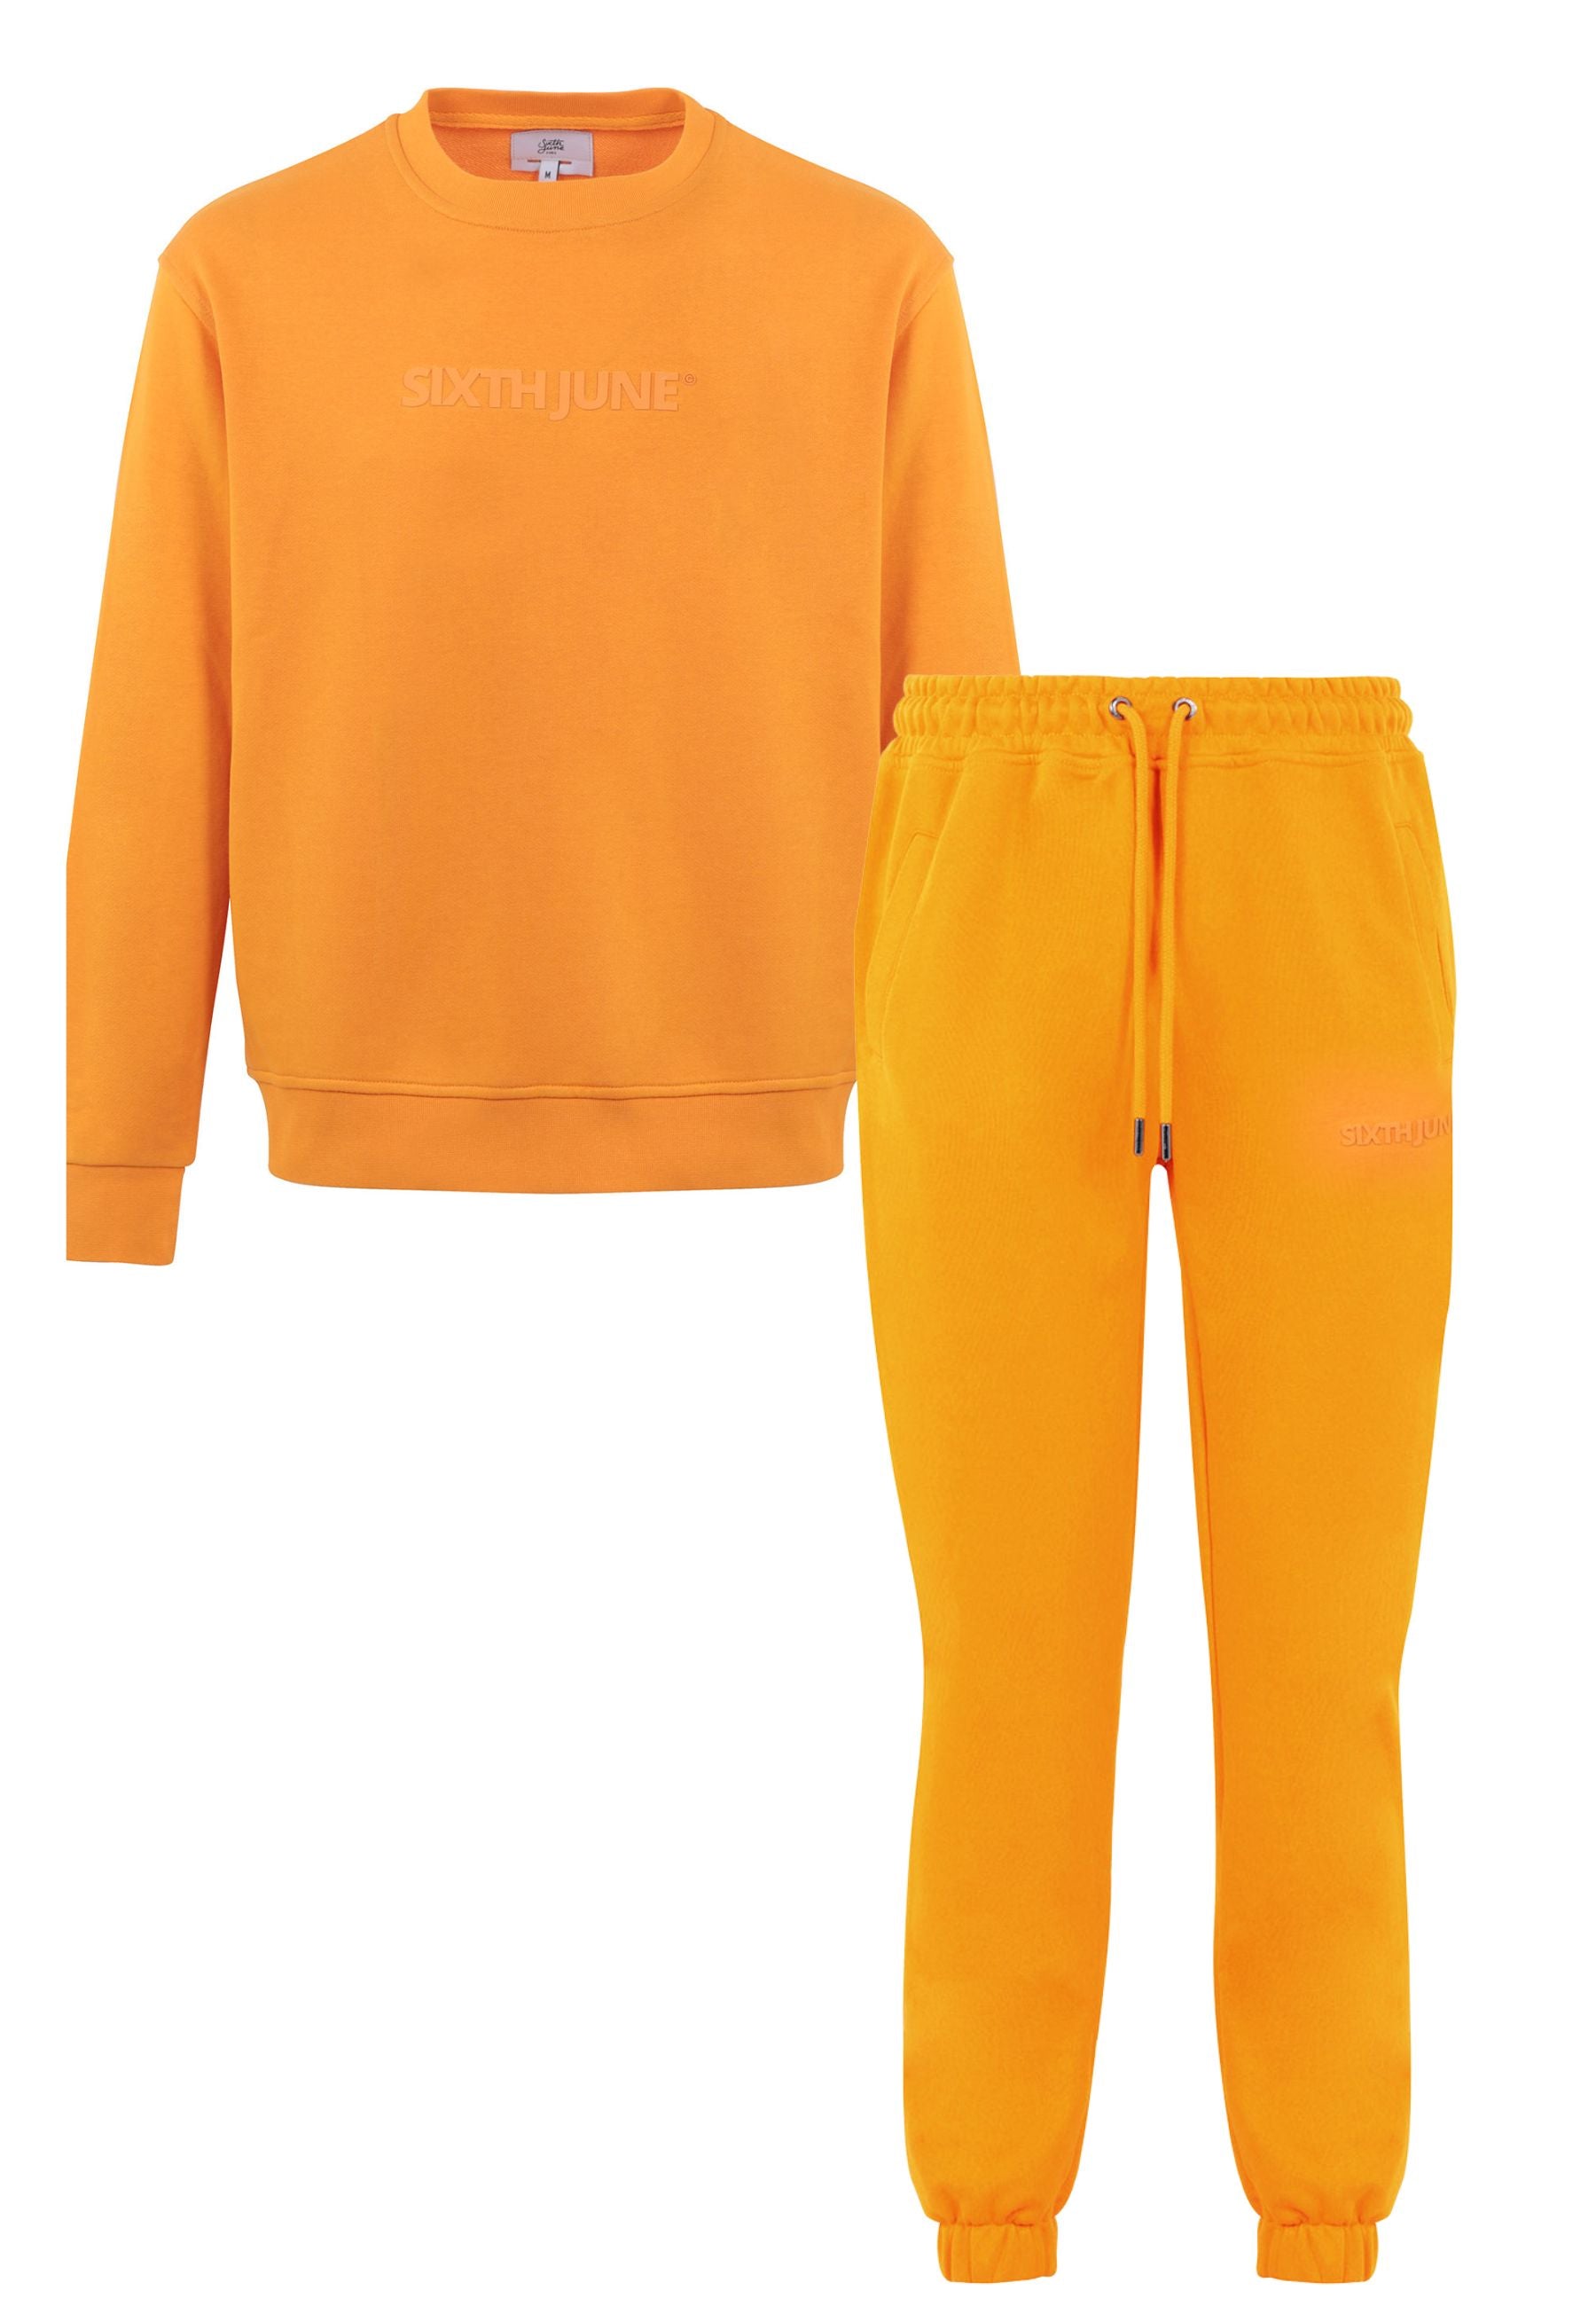 Sixth June - Jogging + sweat logo gommé Orange